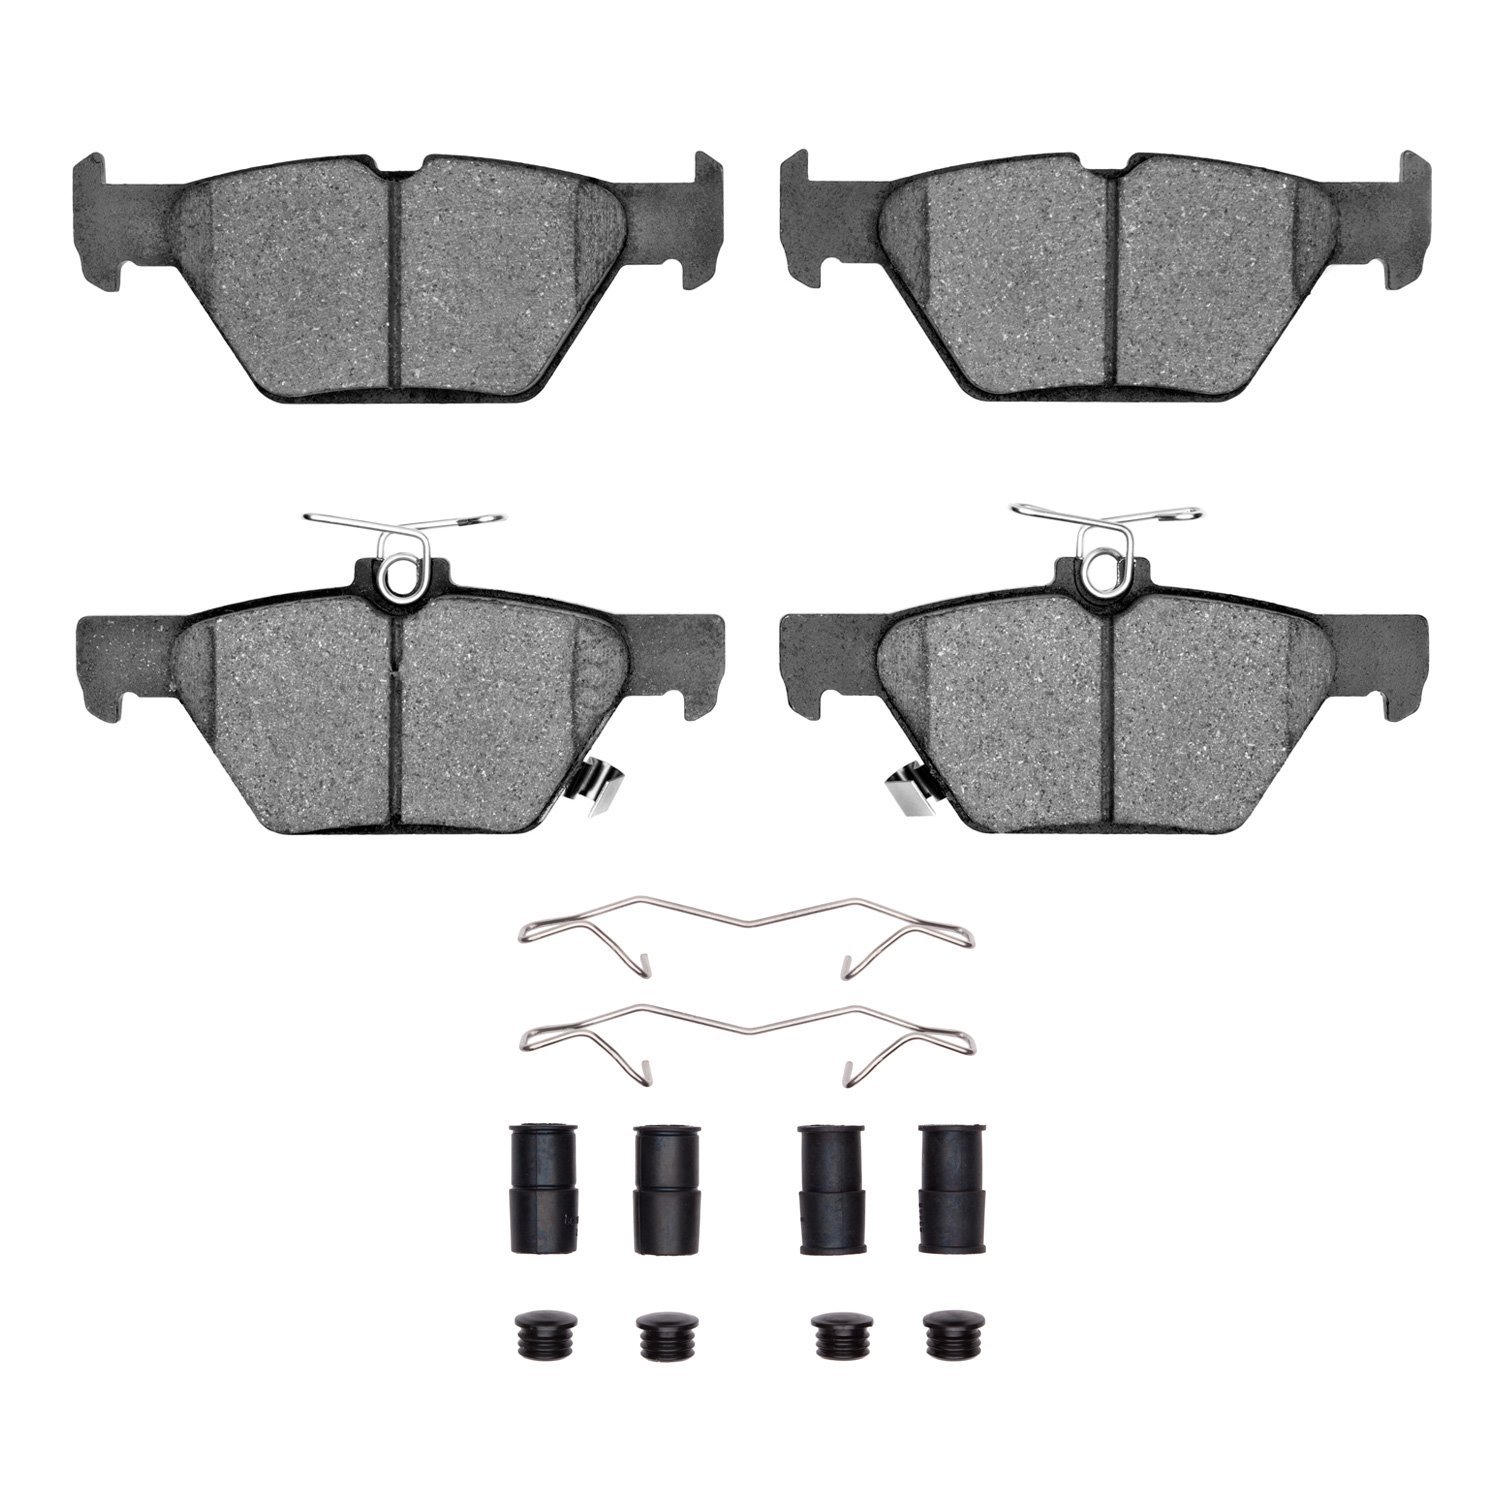 1310-1808-01 3000-Series Ceramic Brake Pads & Hardware Kit, Fits Select Subaru, Position: Rear